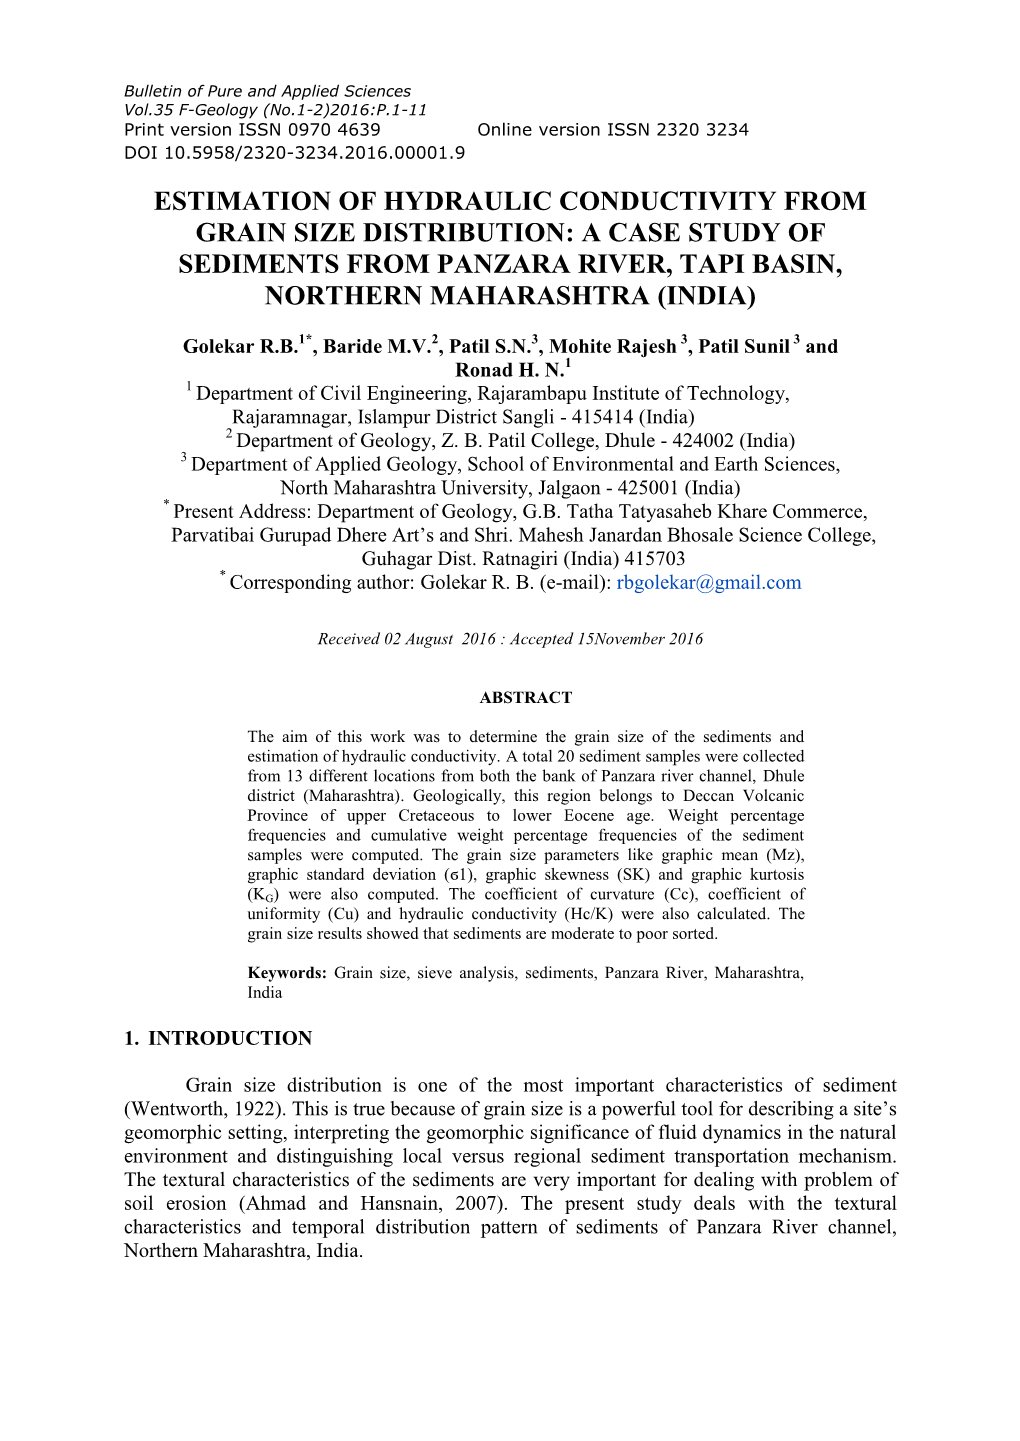 Estimation of Hydraulic Conductivity from Grain Size Distribution: a Case Study of Sediments from Panzara River, Tapi Basin, Northern Maharashtra (India)